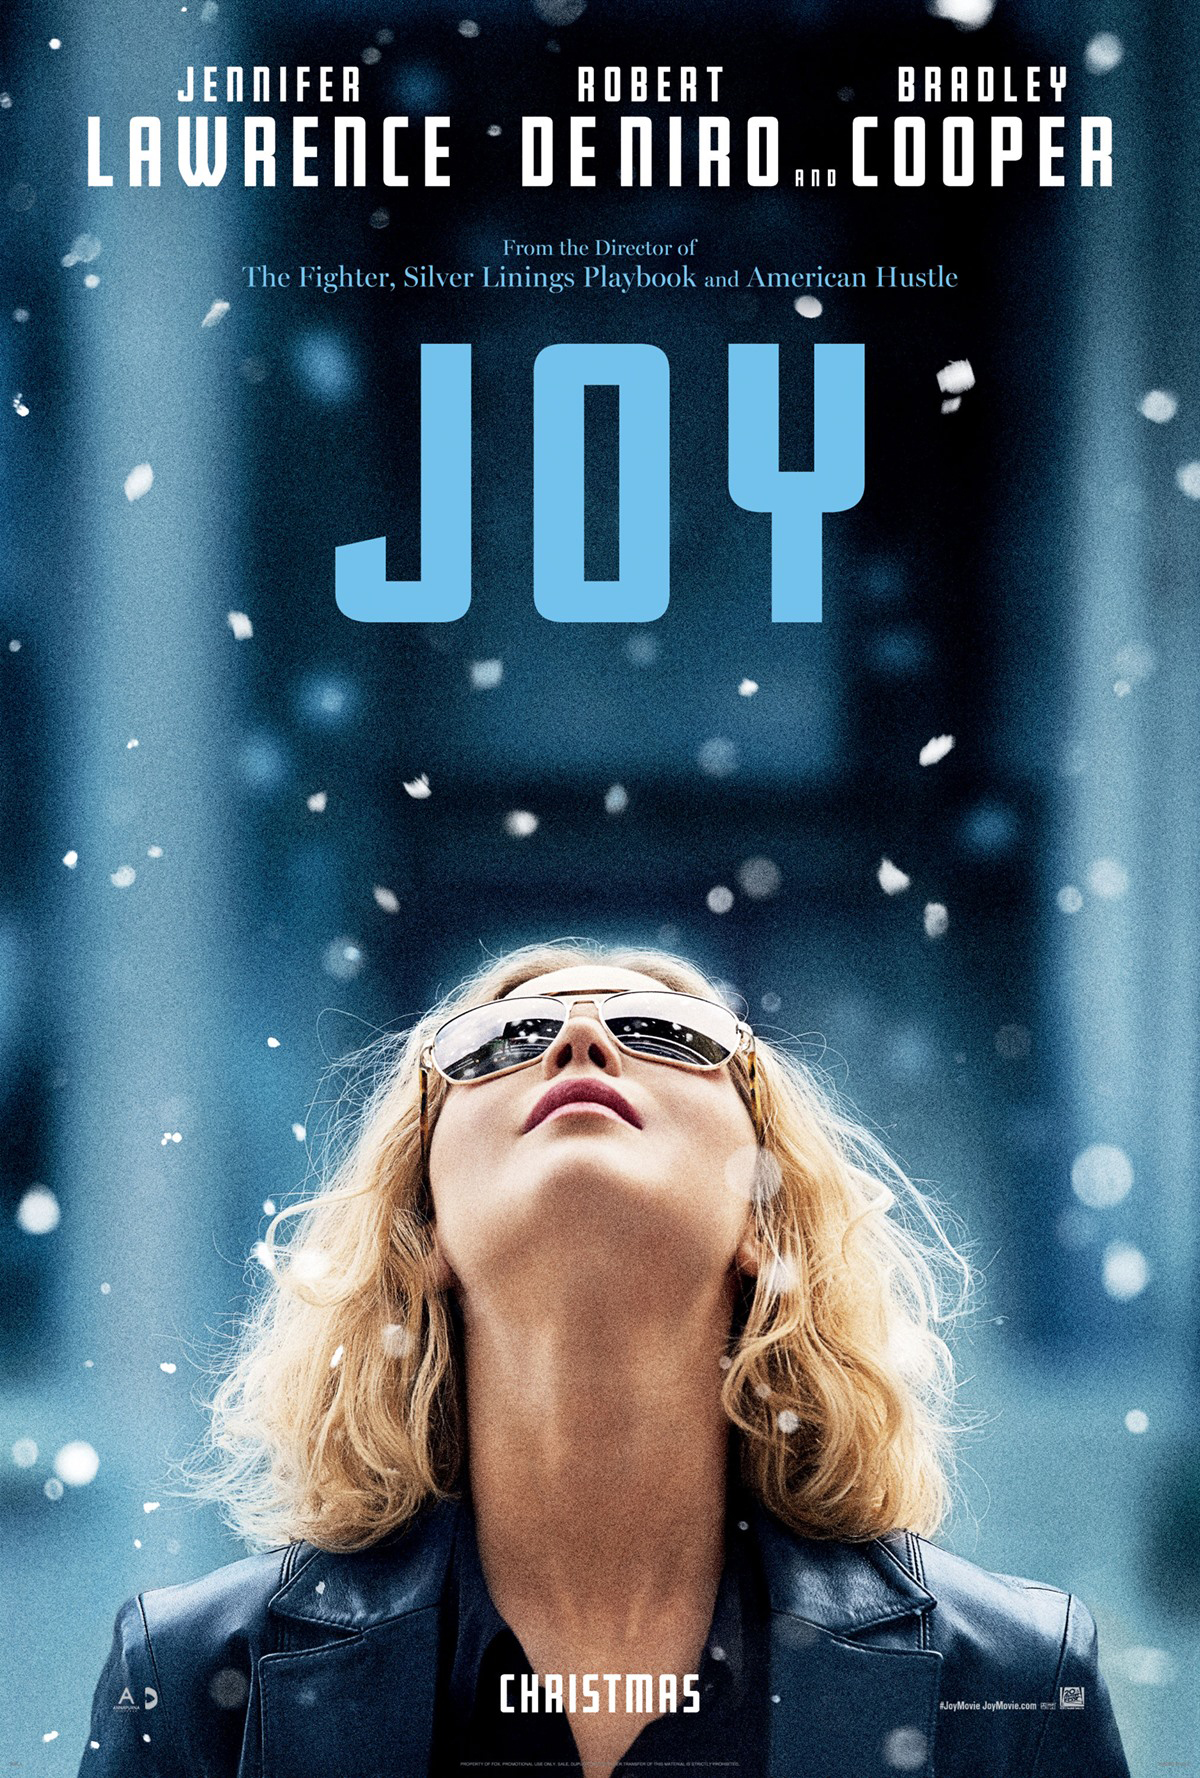 Oscar Winning ‘Whiplash’ Editor Tom Cross on working with Director David O. Russell on NEW film ‘Joy’